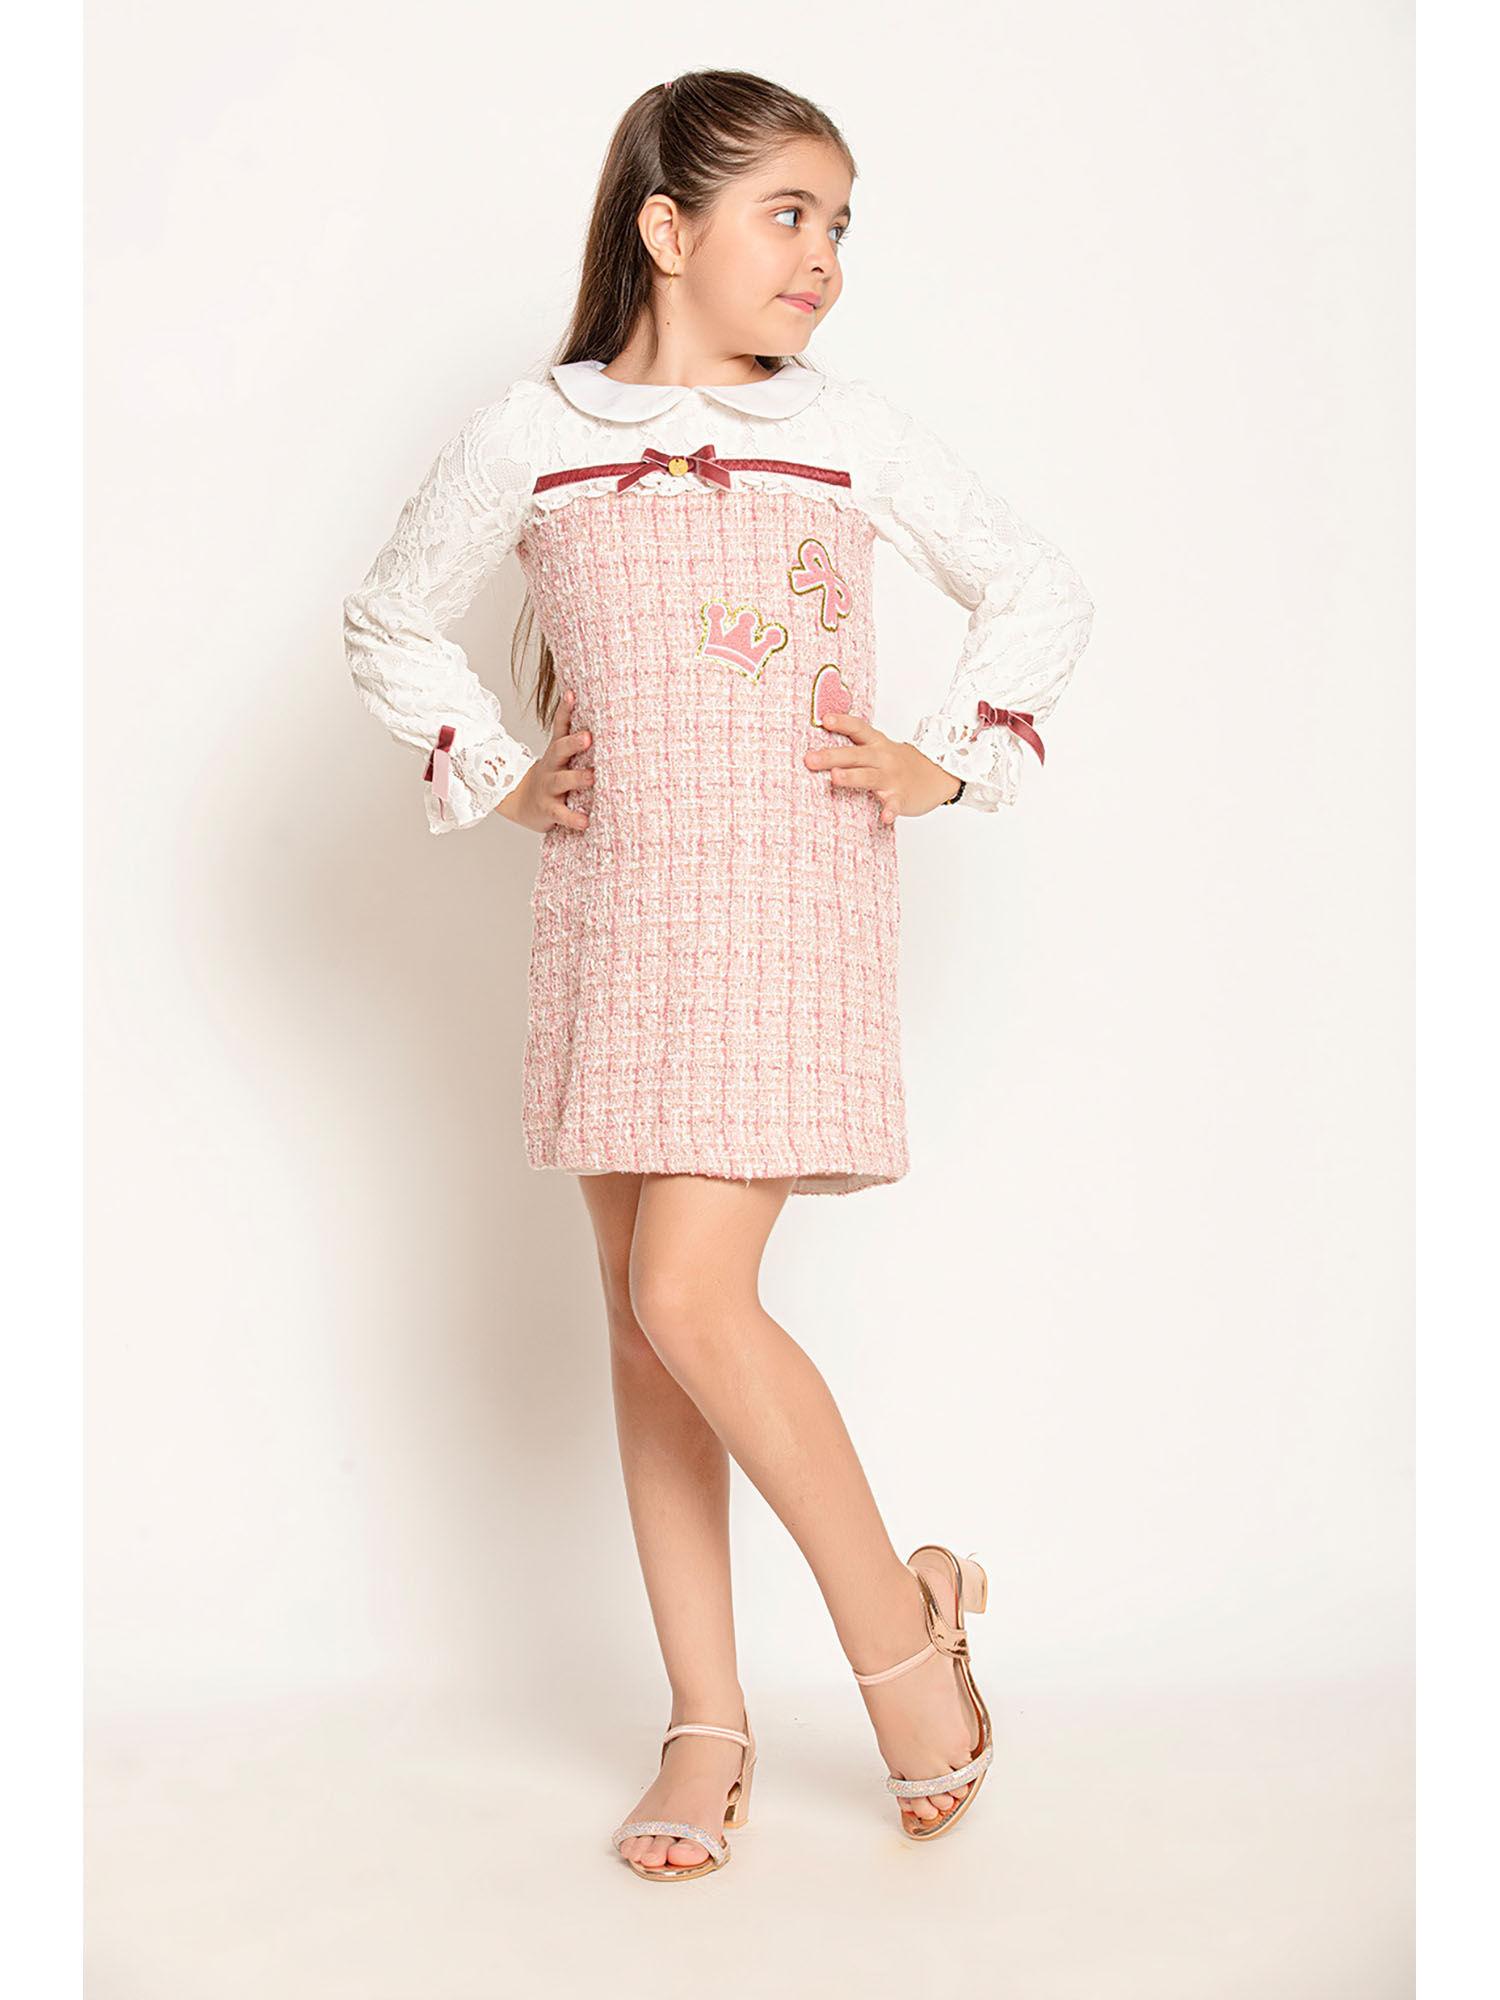 pink dress for girls with school spirit